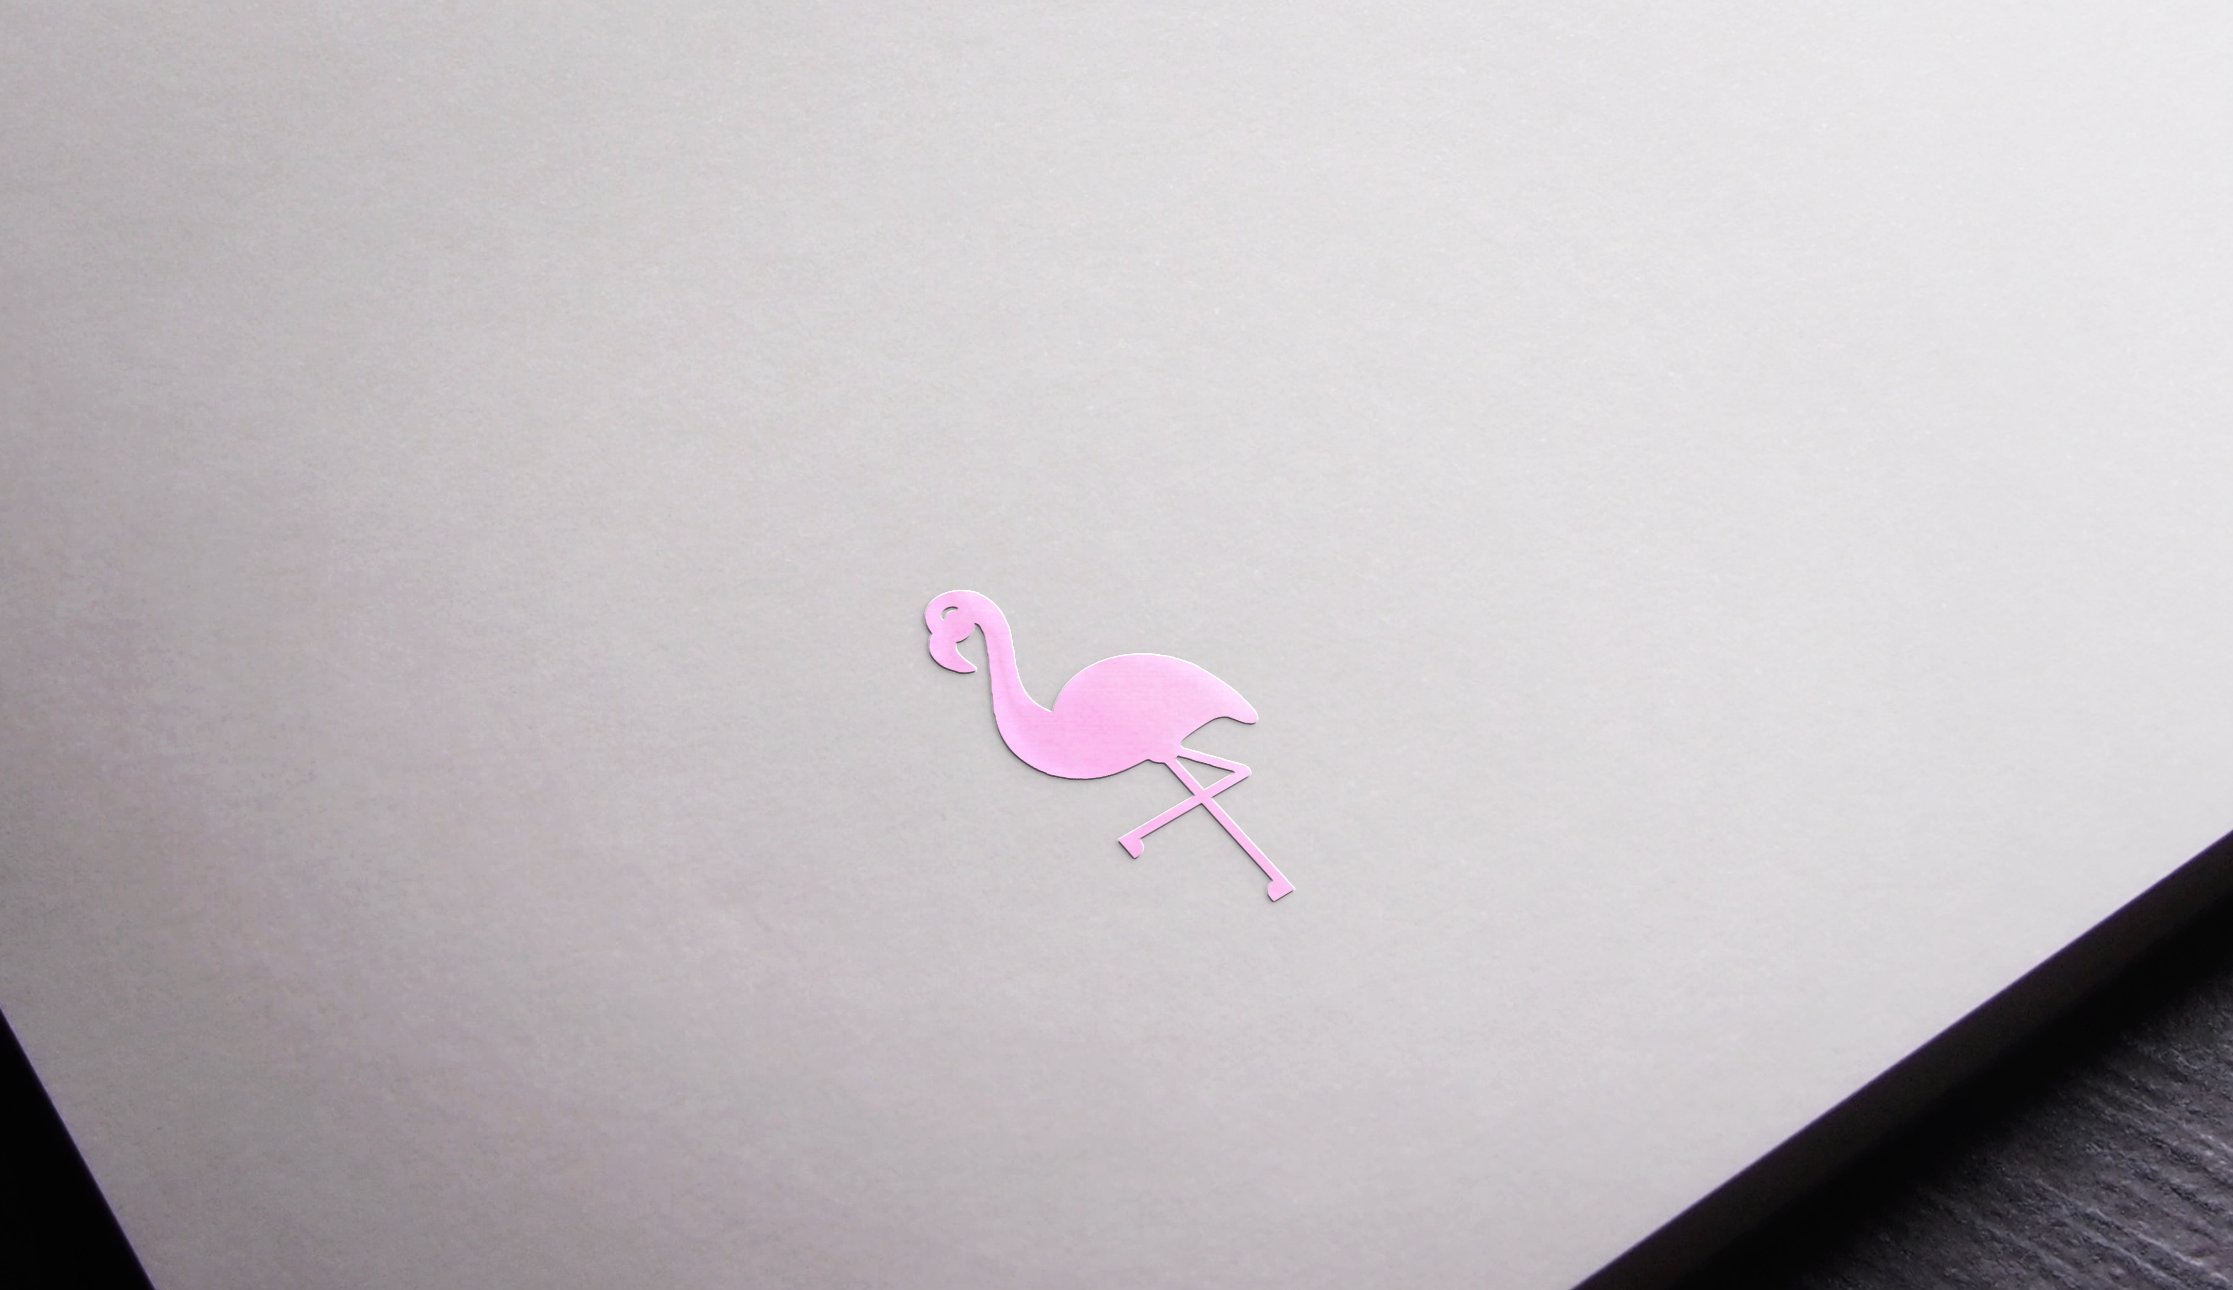 Flamingo preview image.